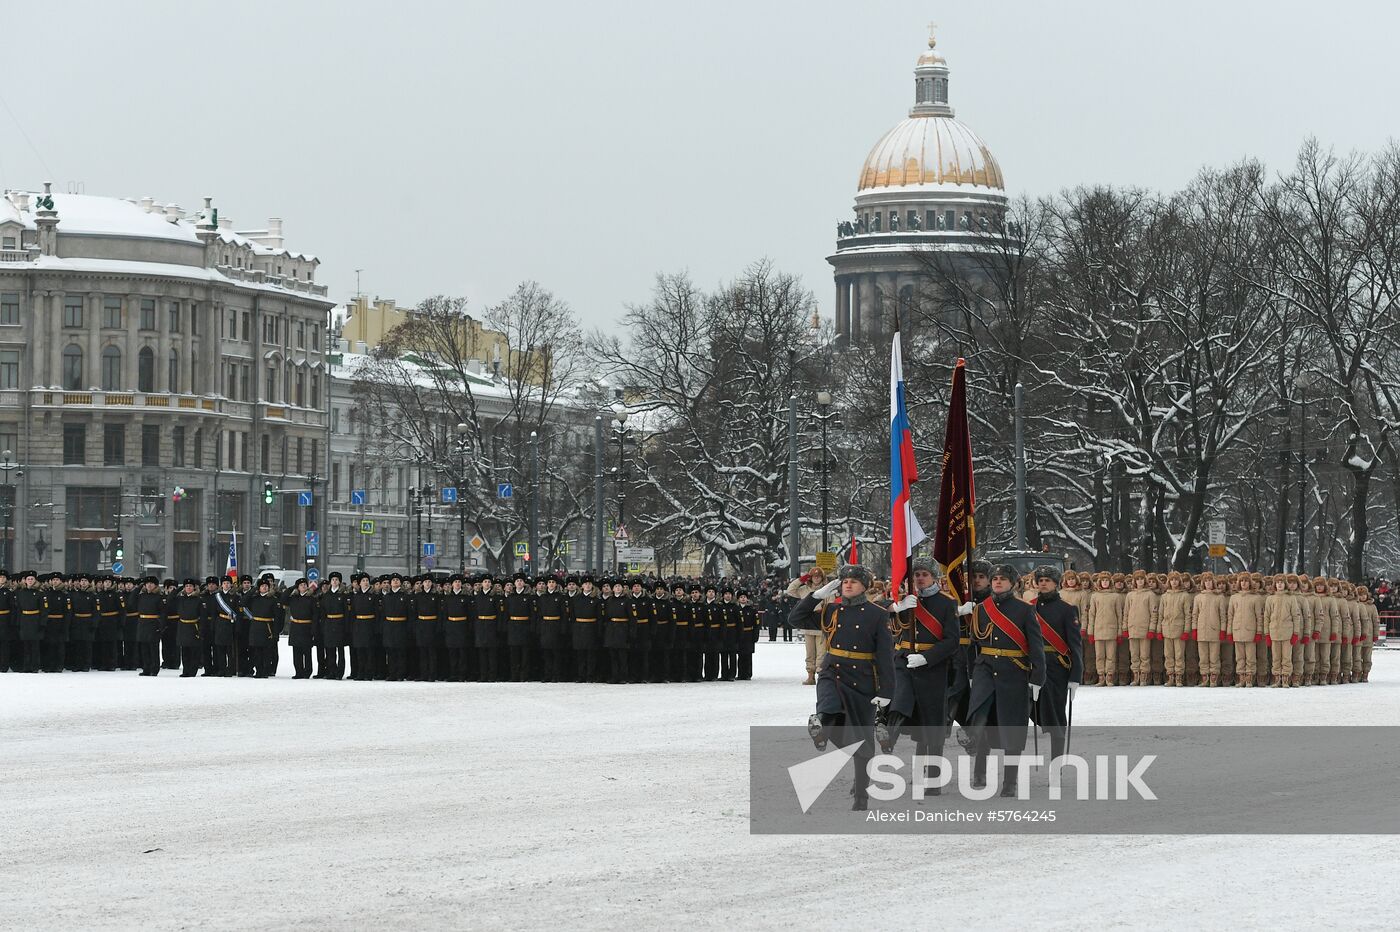 Russia End of Leningrad Siege Anniversary